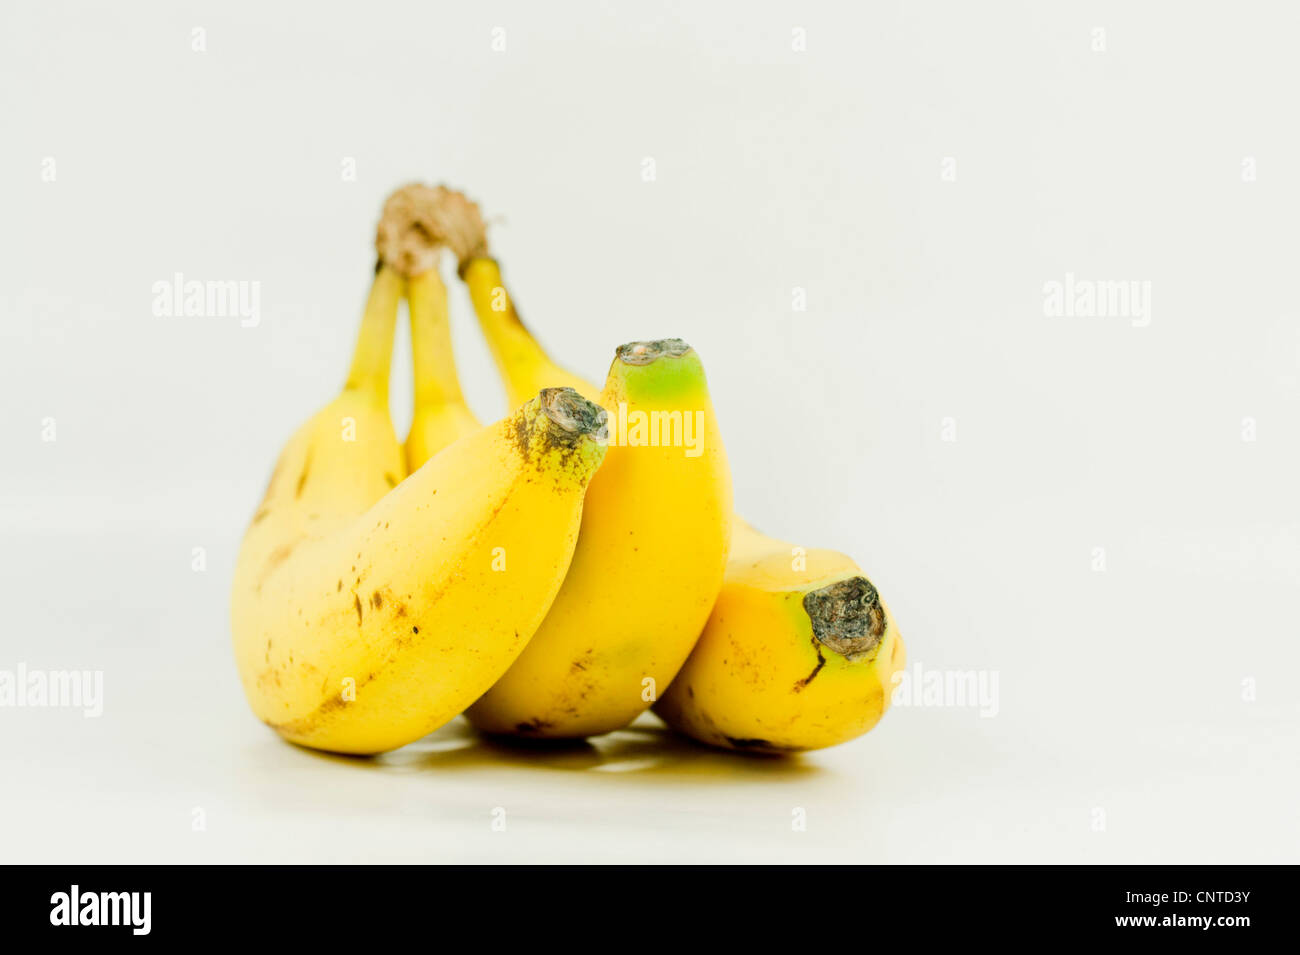 A Bunch of Three Bananas Stock Photo